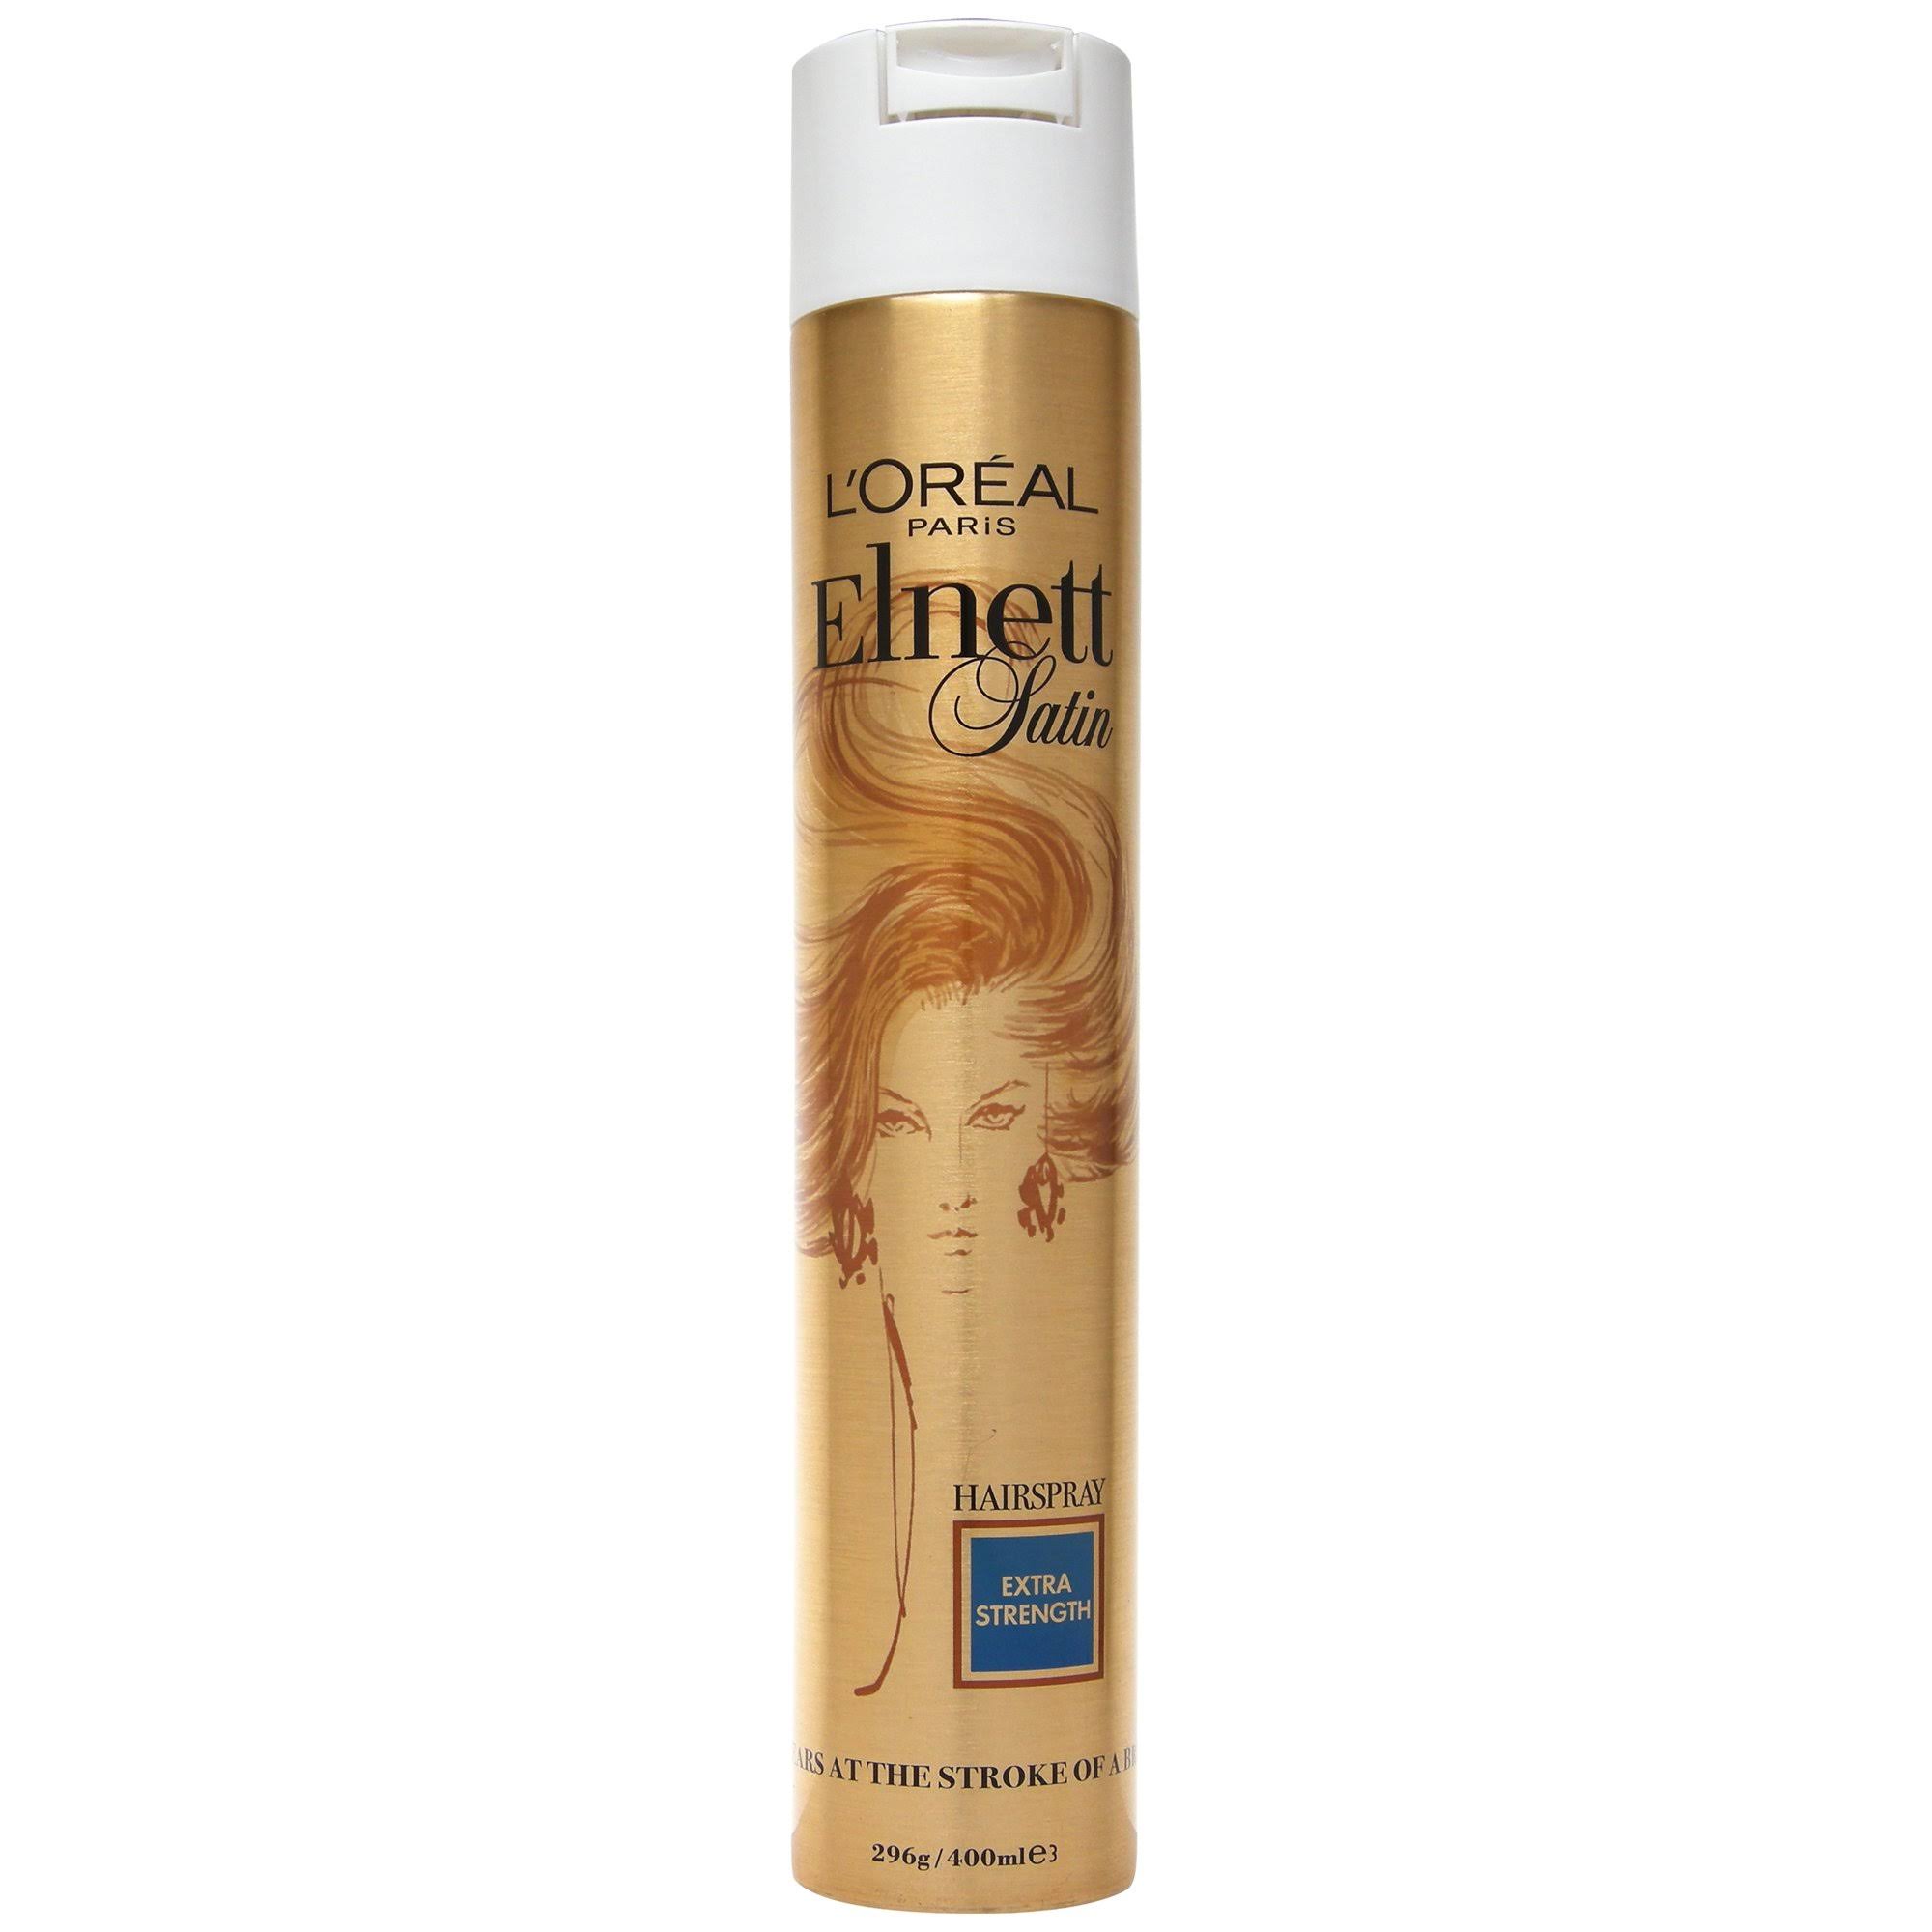 Elnett Satin Extra Strength Hairspray - 40ml